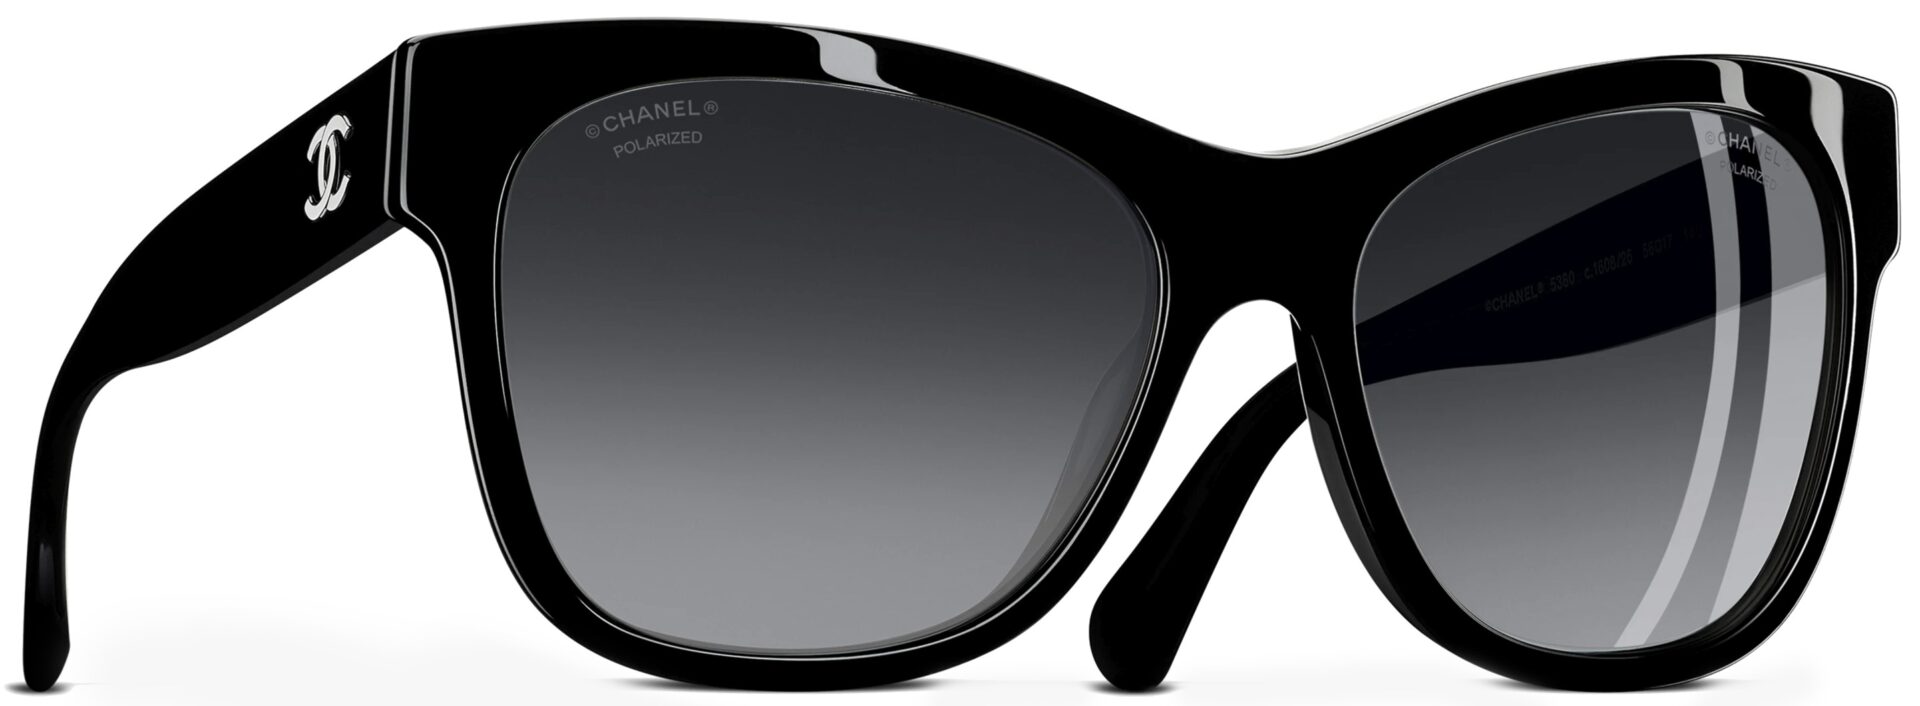 Billy Sunglasses (Black) | style